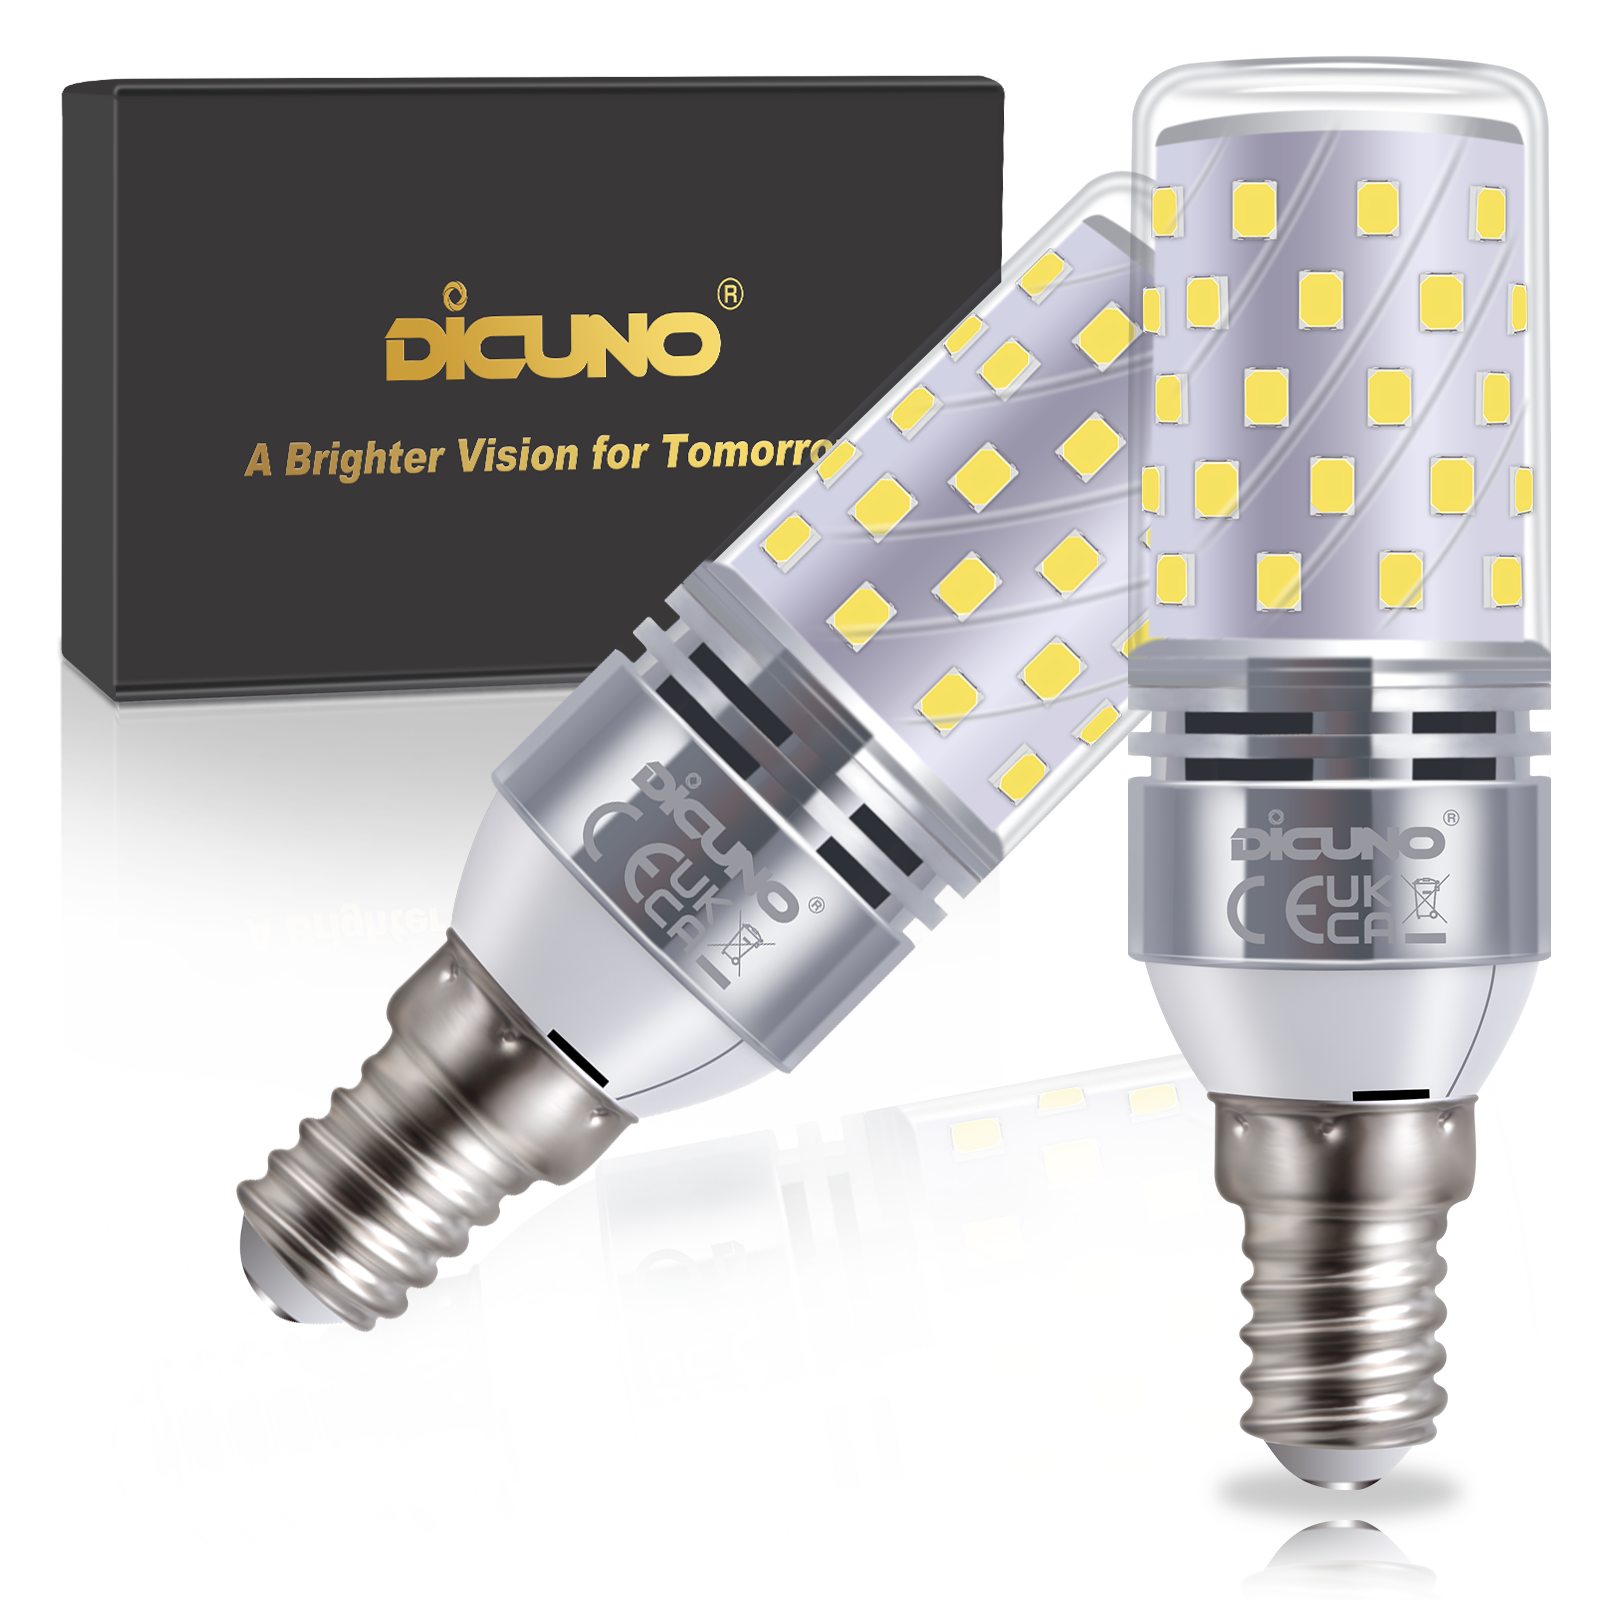 DiCUNO GU10 LED Lampen 5W, Warmweiß 2700K, MR16 LED Reflektor ersatz 50W  Halogenbirne, 400LM, GU10 LED Strahler nicht dimmbar, kein Flackern, 85Ra